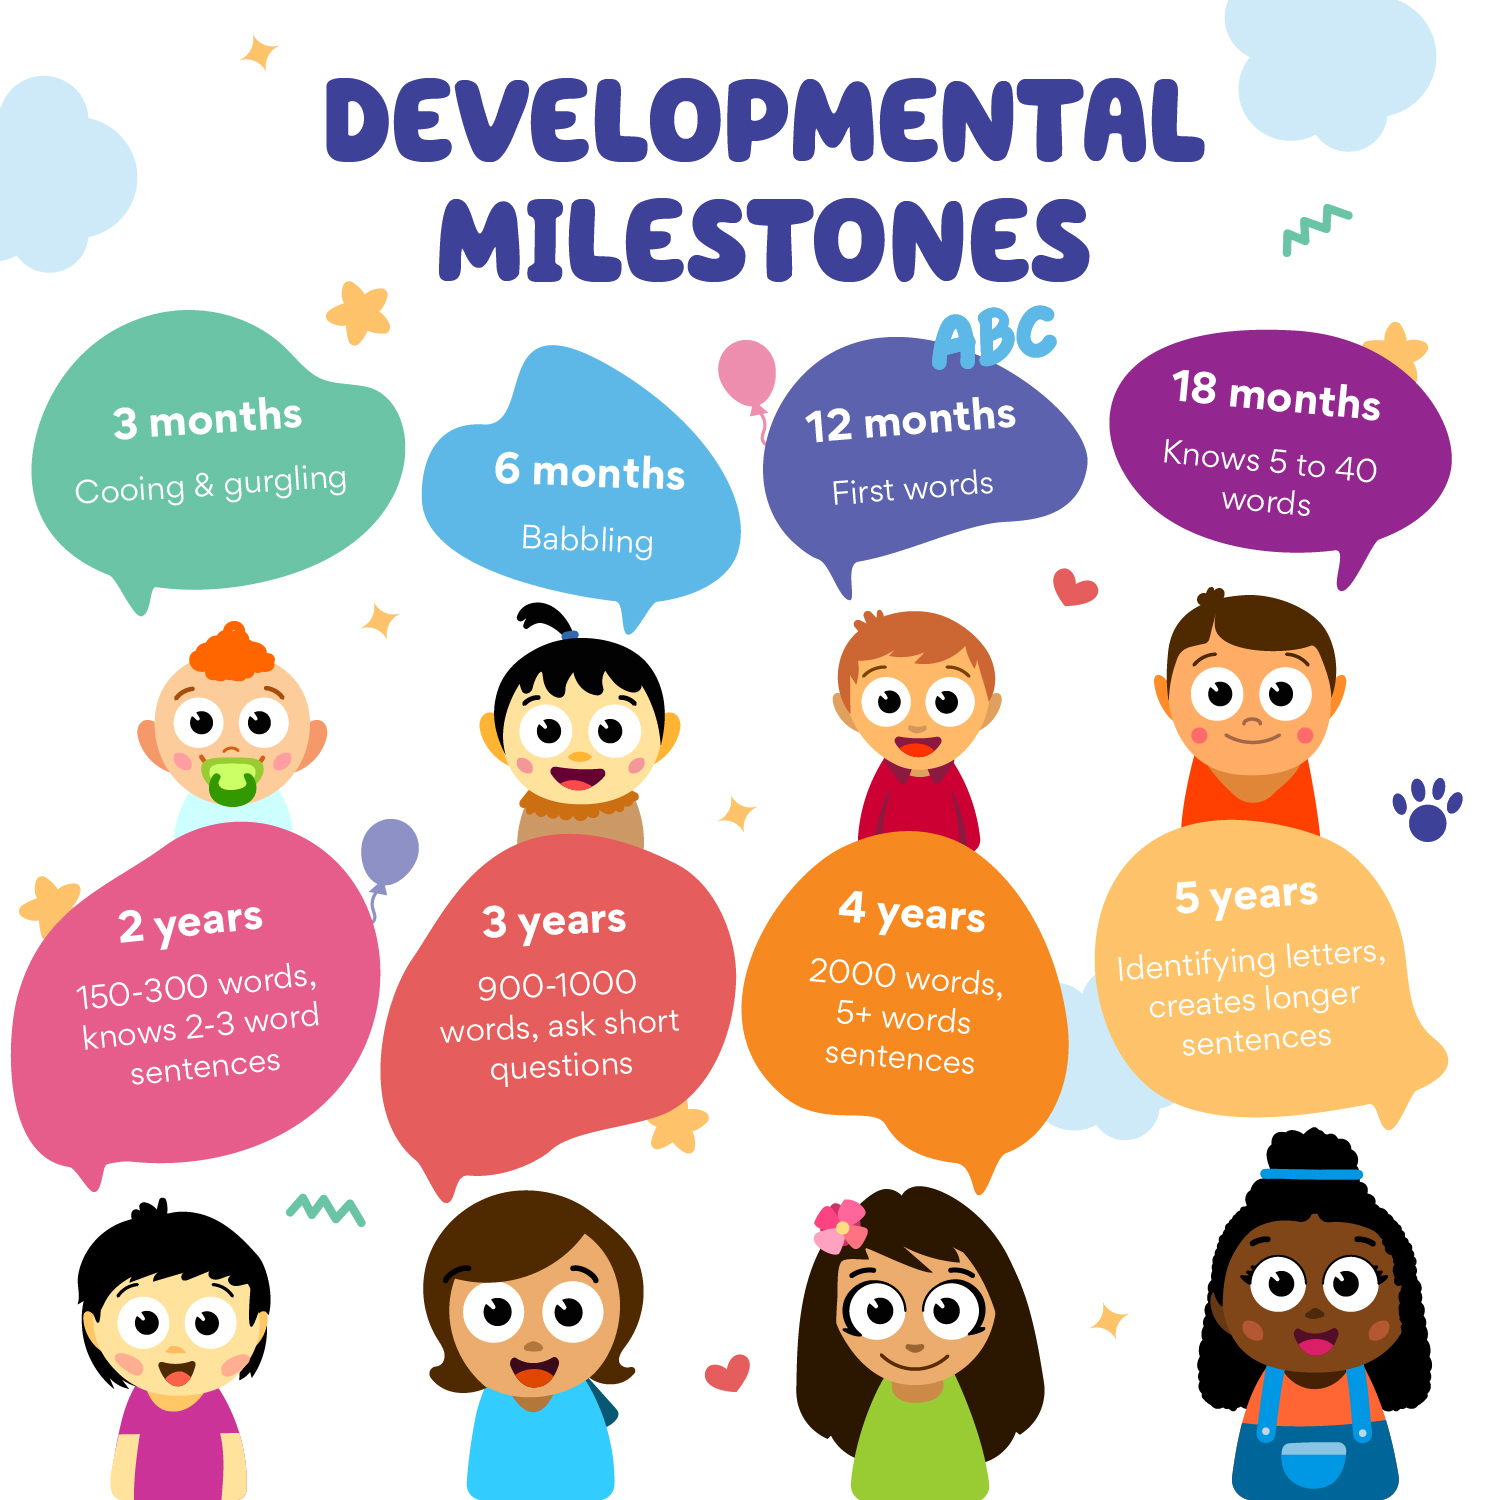 Speech Development Milestones for kids from birth to 5 years old